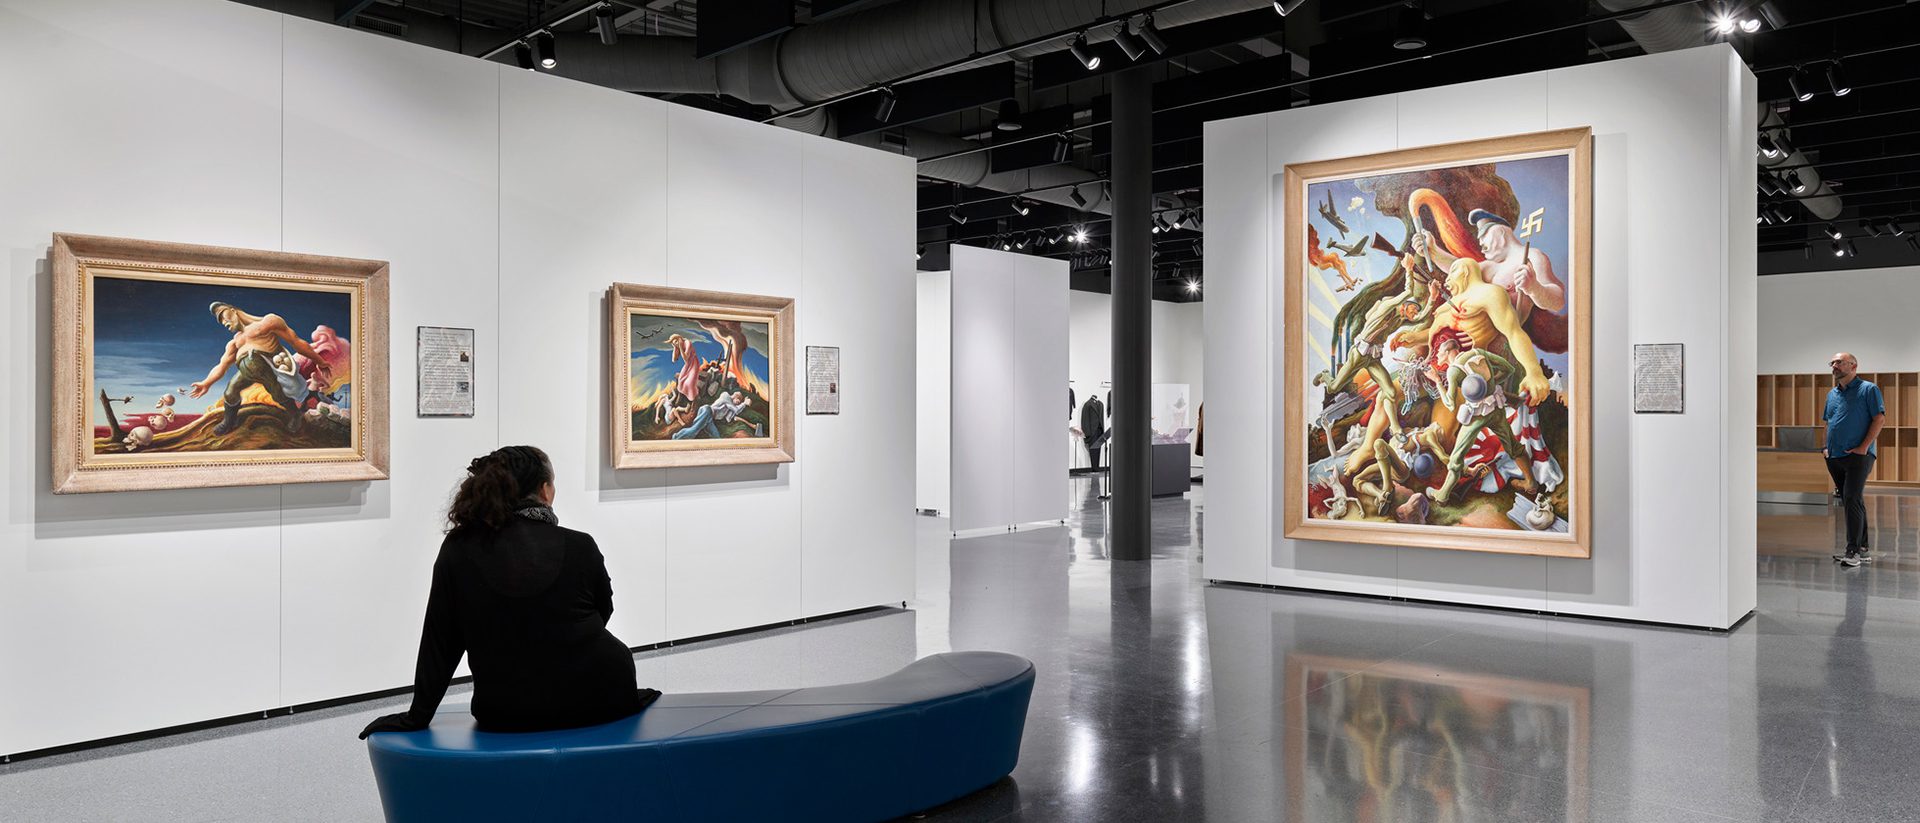 Image of the art gallery featuring Thomas Hart Benton's work.